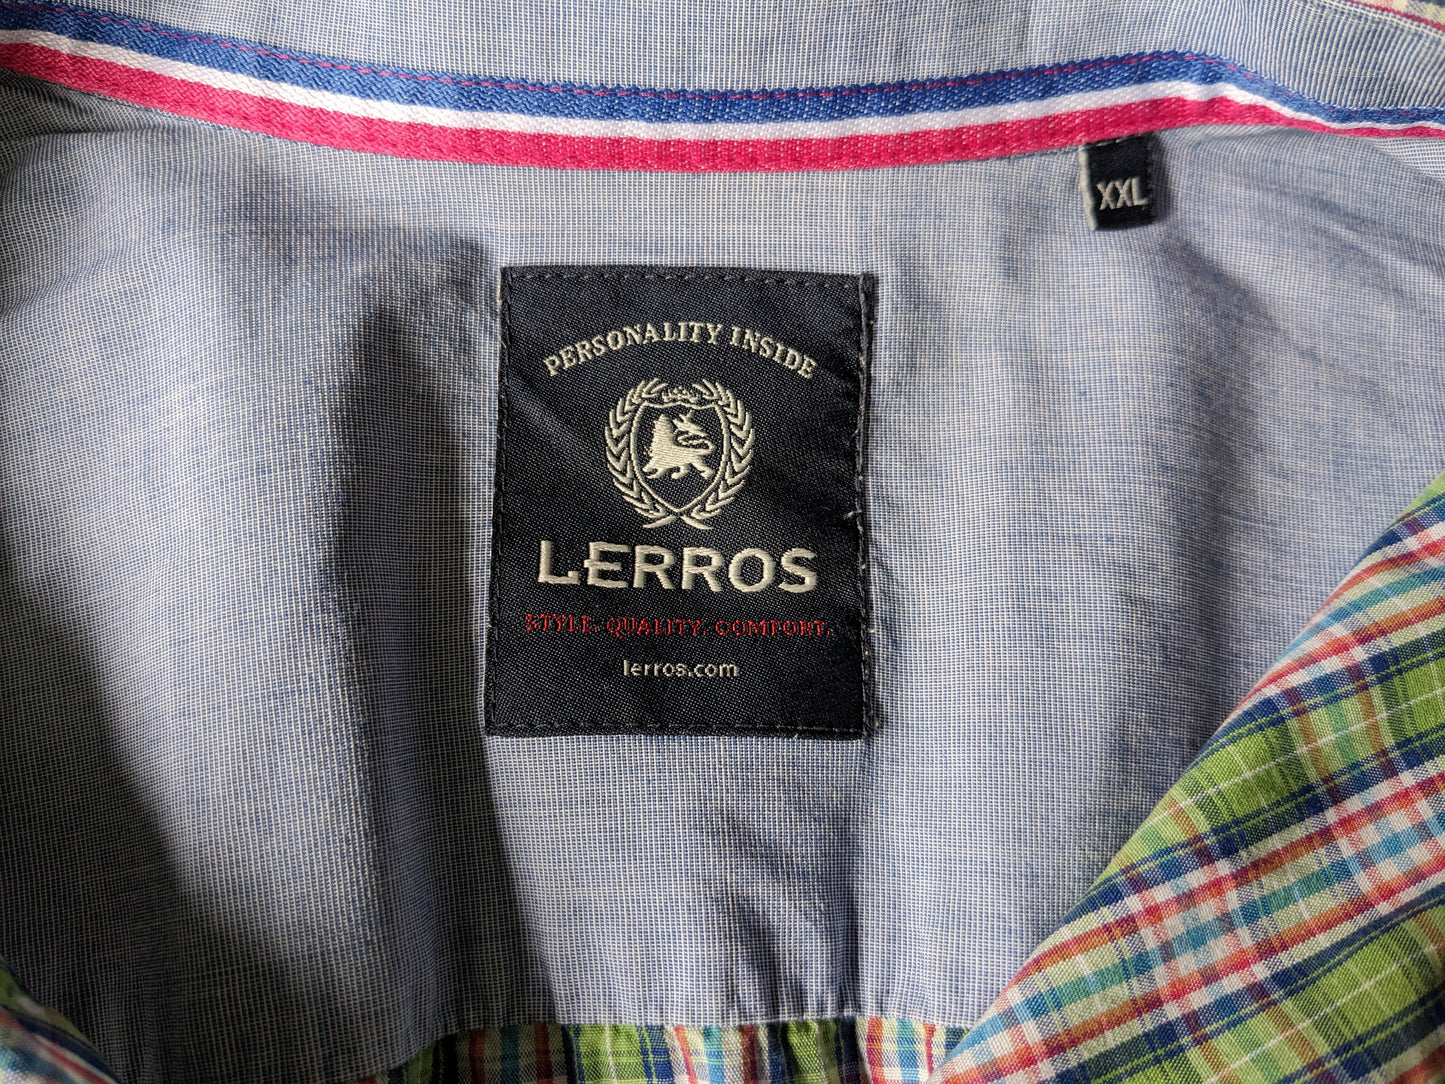 Lerros Shirt Sleeve. Bleu rouge vert vérifié. Taille xxl / 2xl.